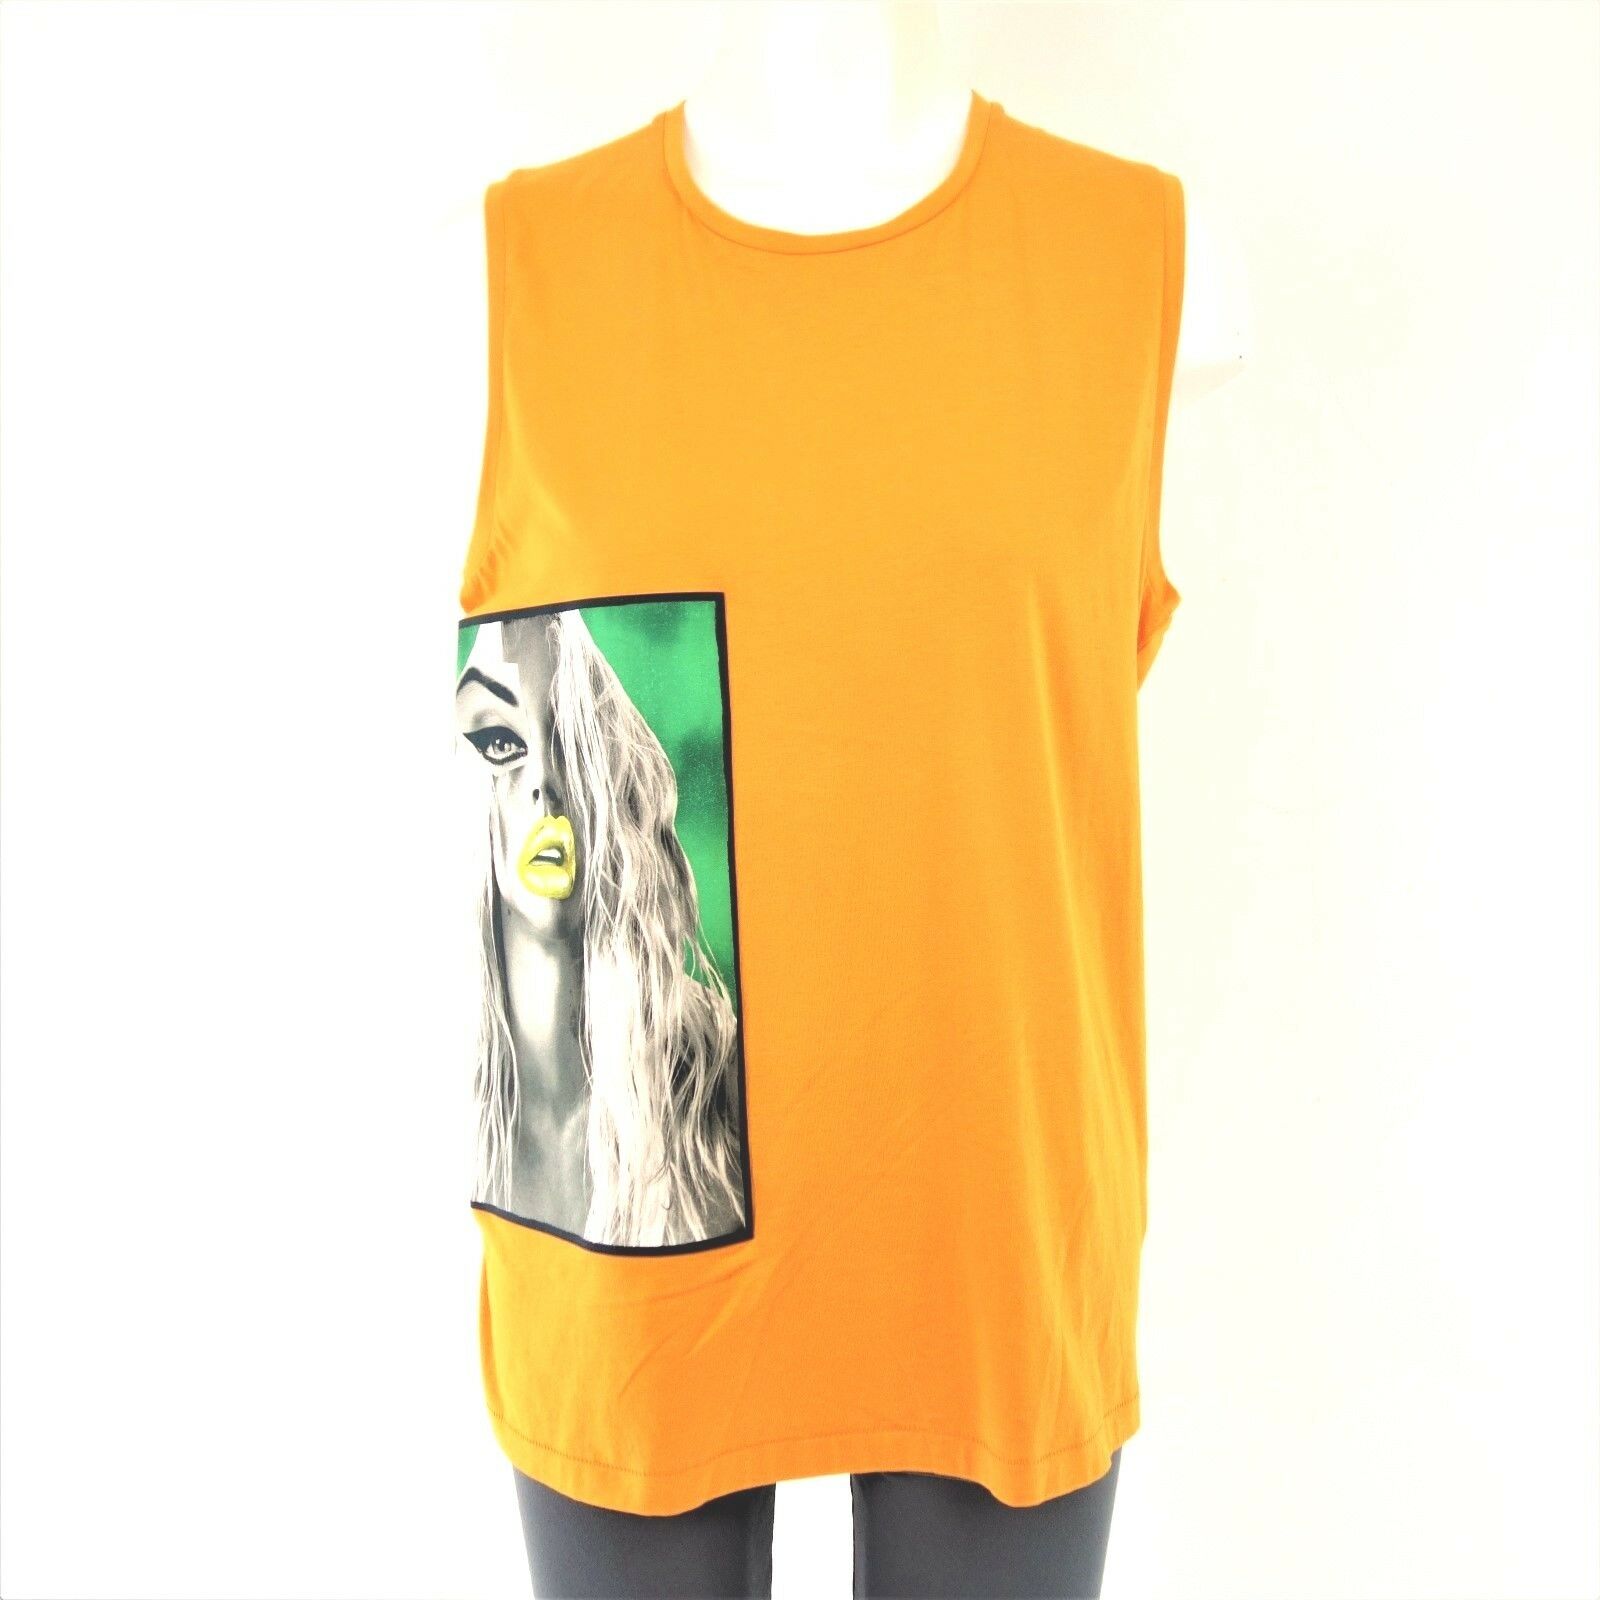 Acne Studios Damen Sommer Tank Top Shirt Bye Portrait Gr 40 L Orange Np 120 Neu